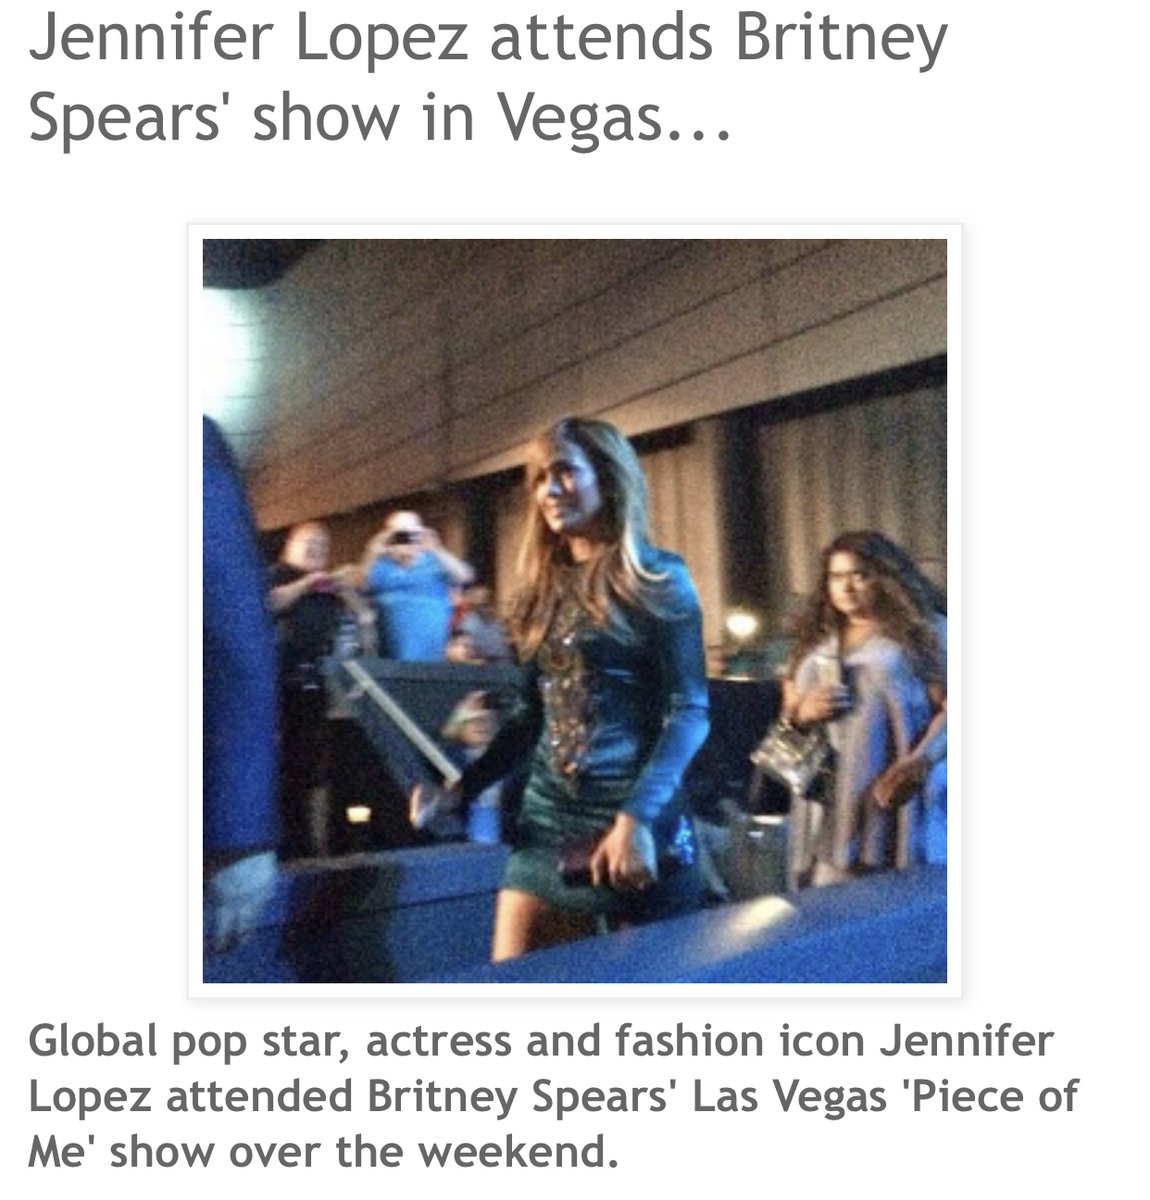 Jennifer Lopez said she studied Britney's show for her own Vegas residency.